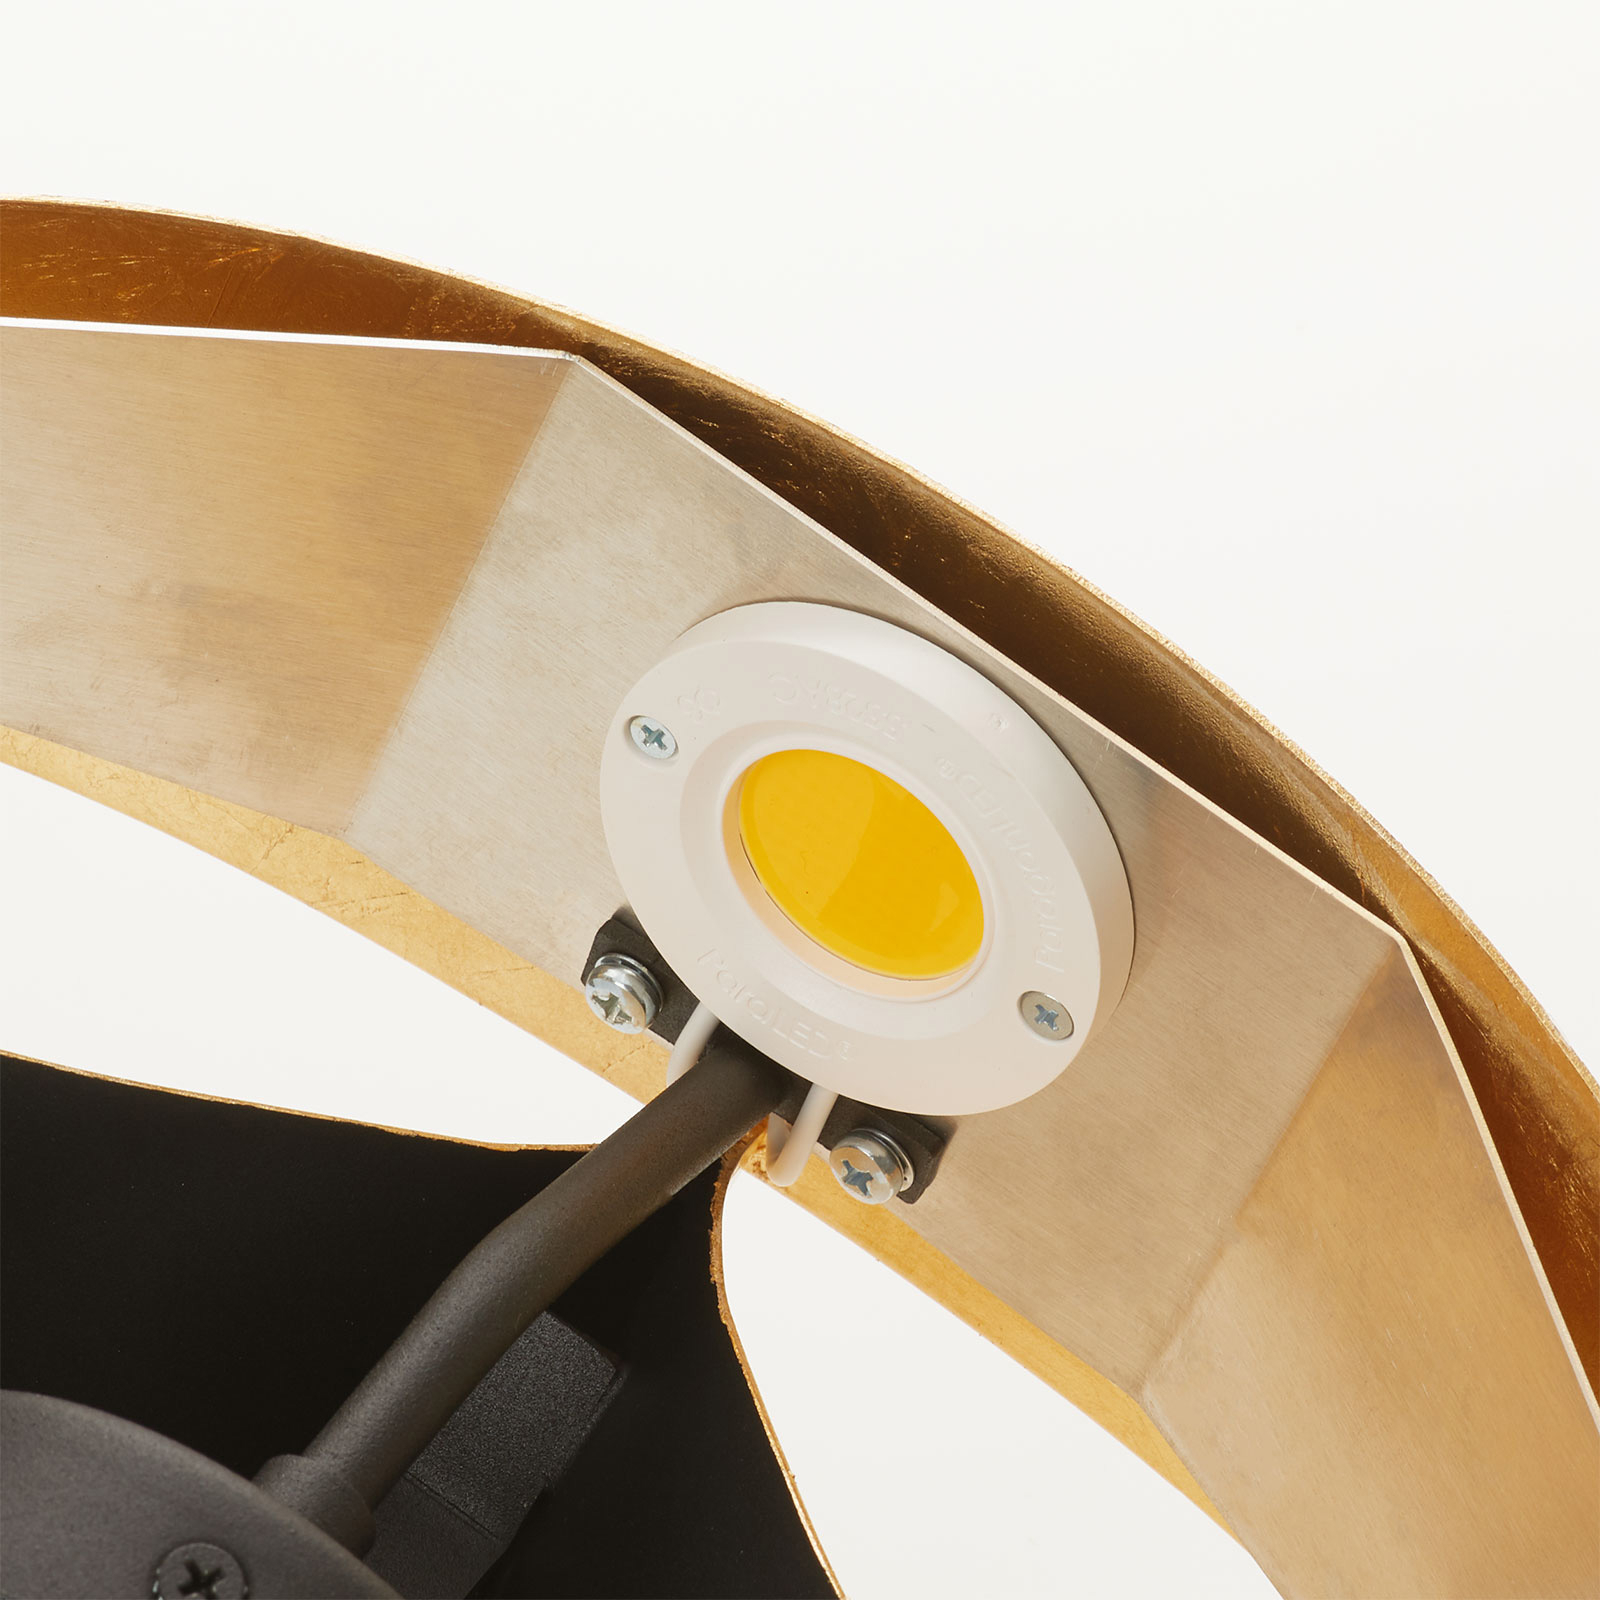 Schwarz-goldene Designer-Wandlampe Scudo LED